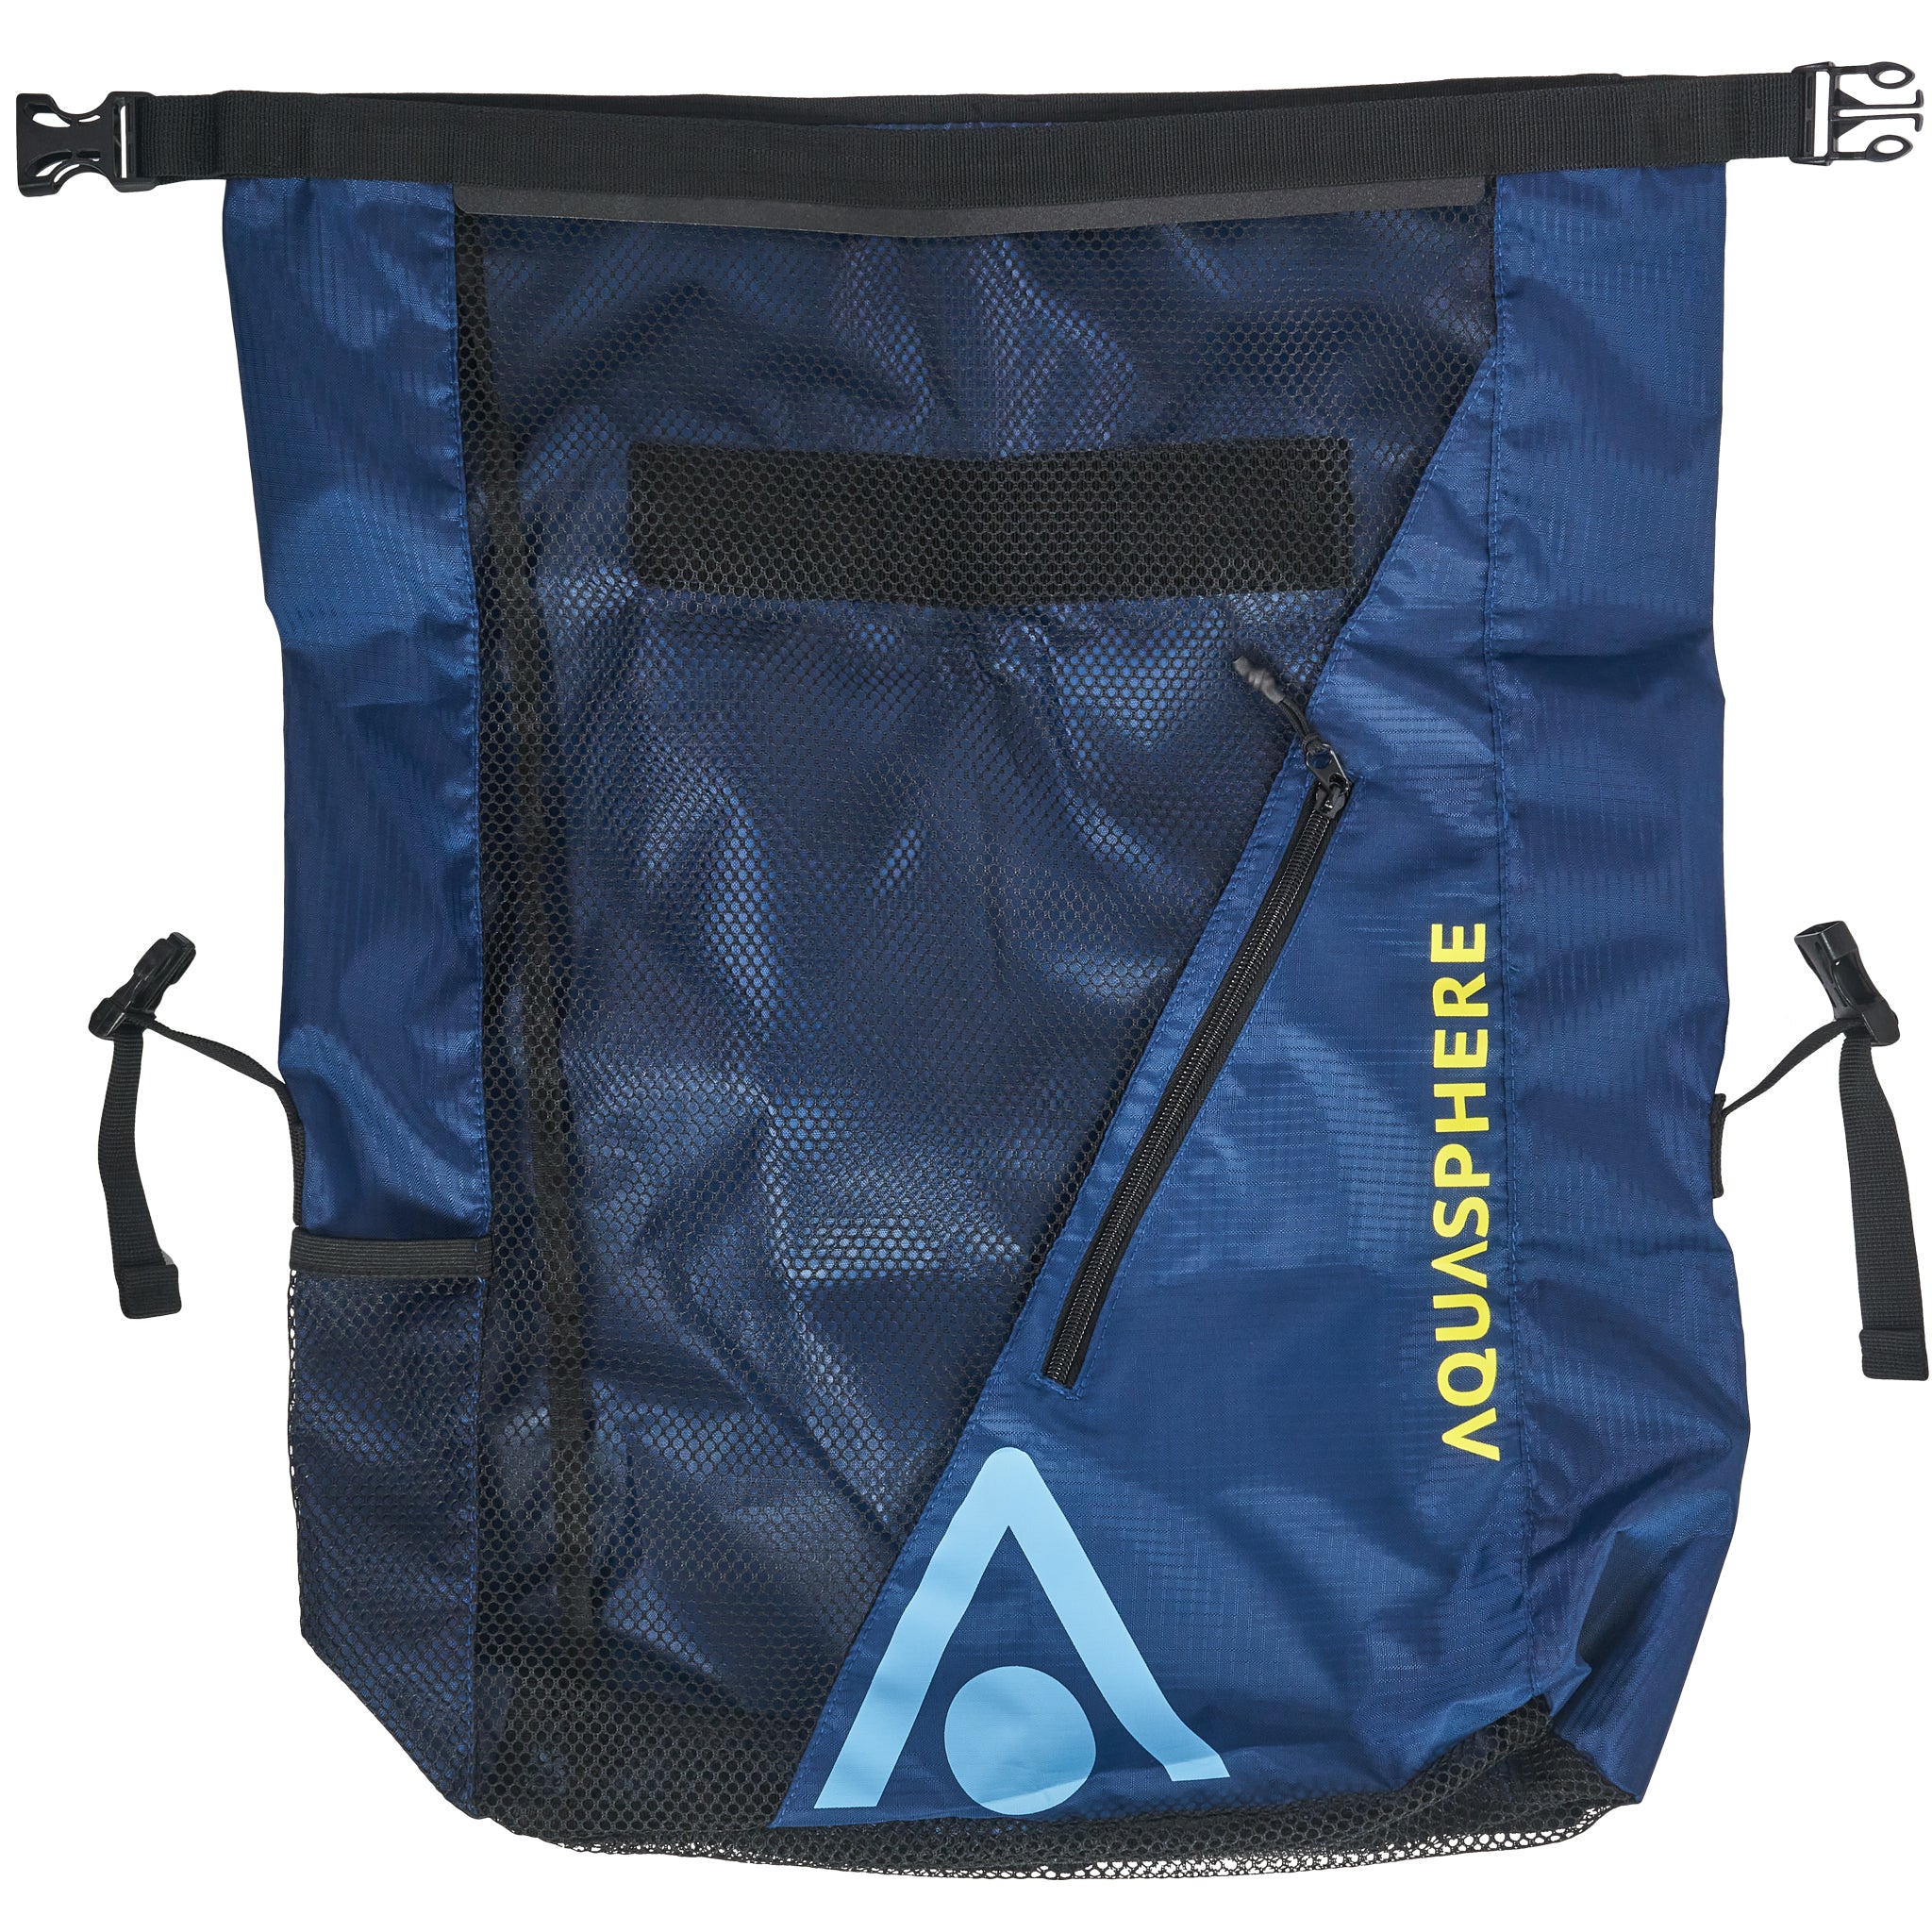 Aquasphere Mesh Swim Training Kit Backpack